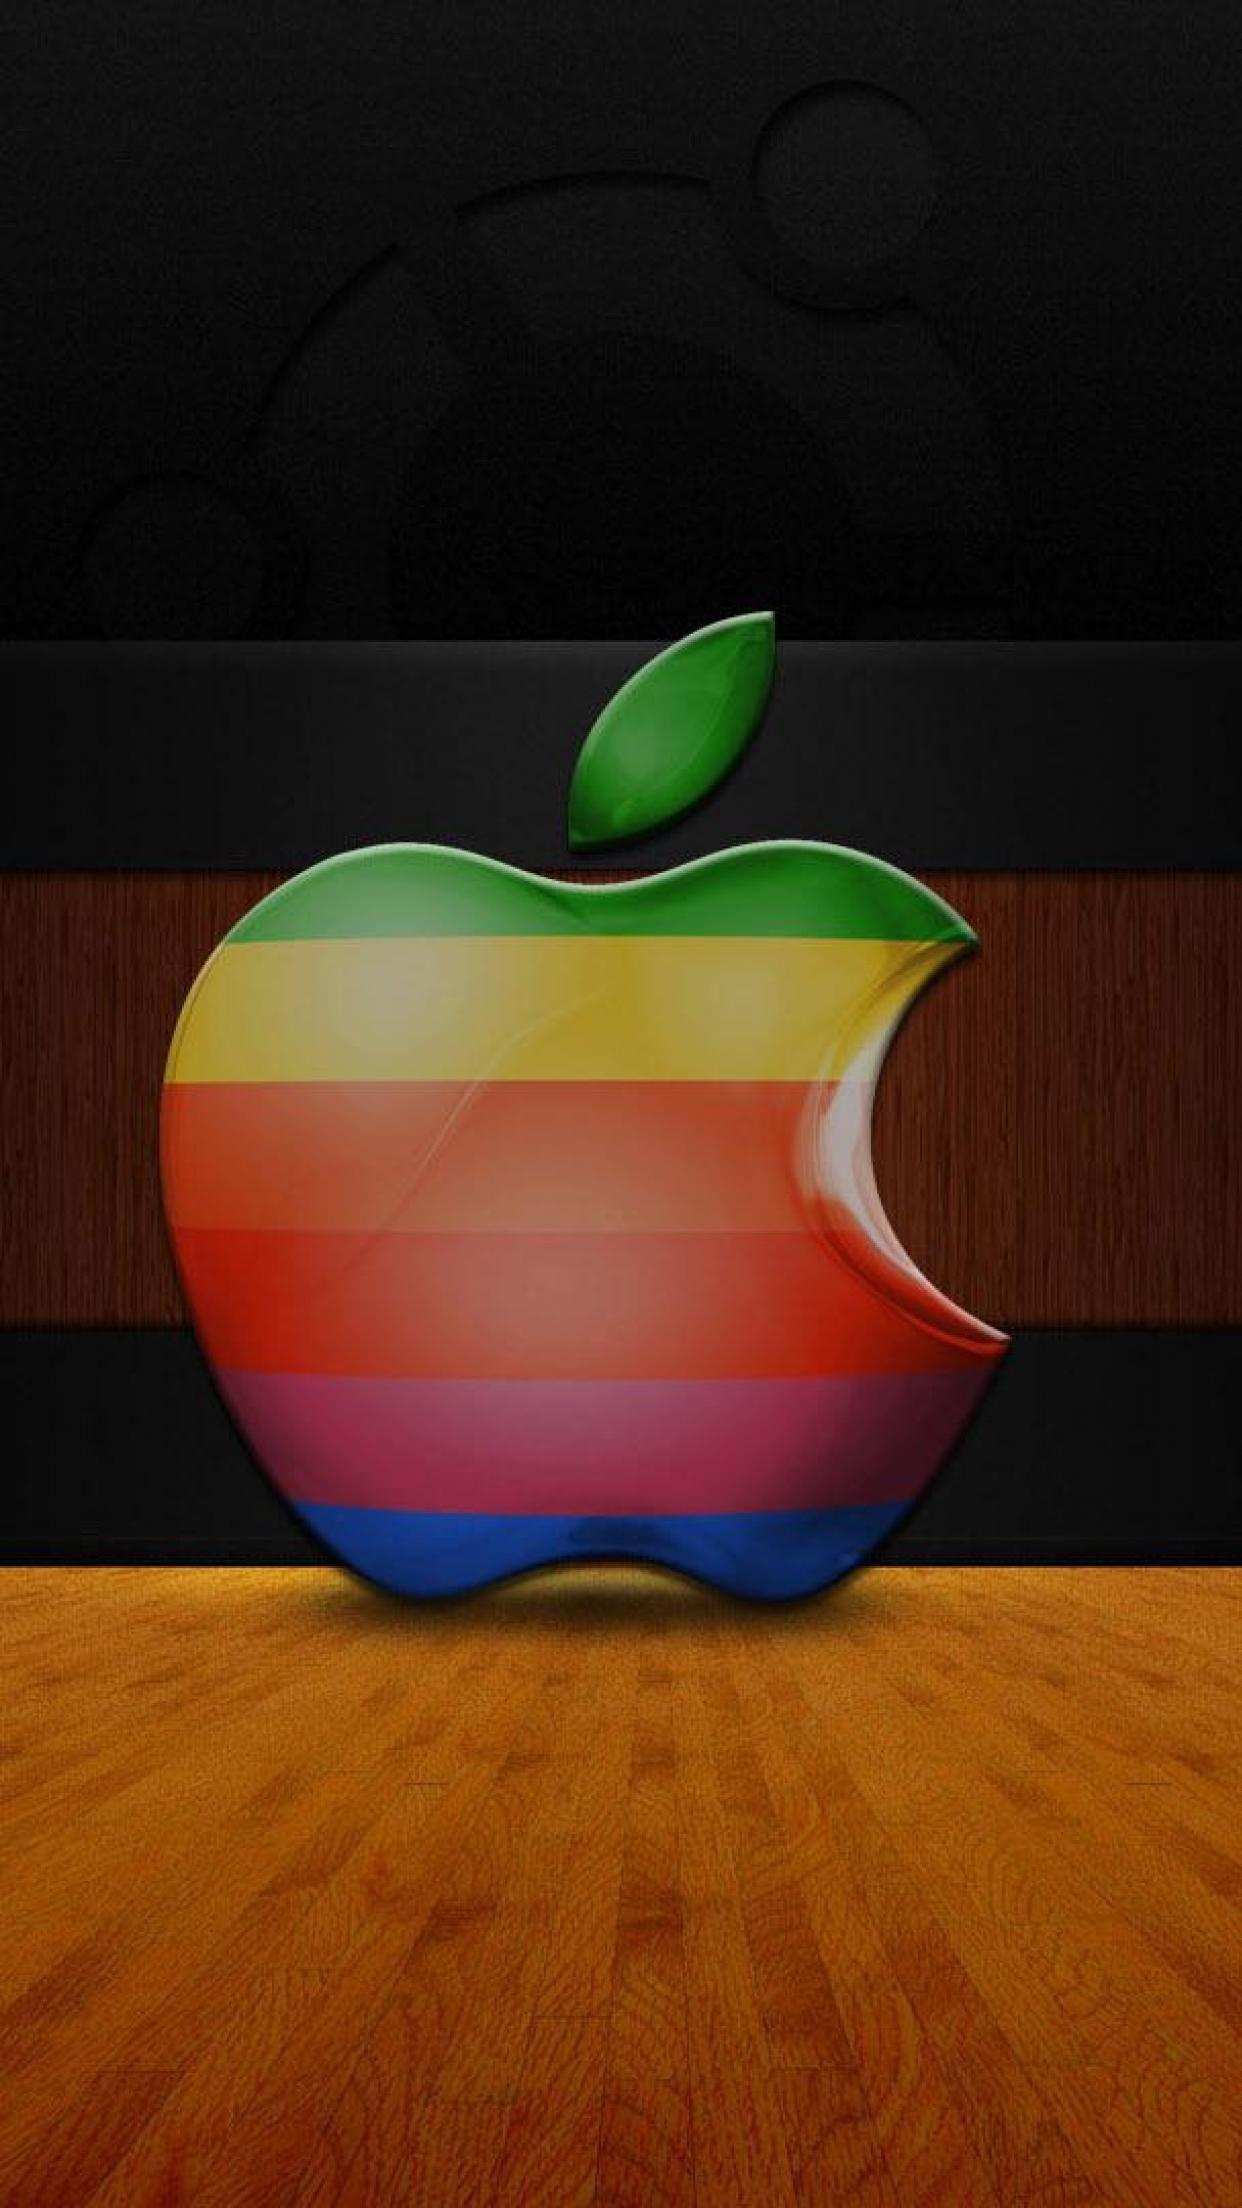 3D Apple iPhone Wallpaper Free 3D Apple iPhone